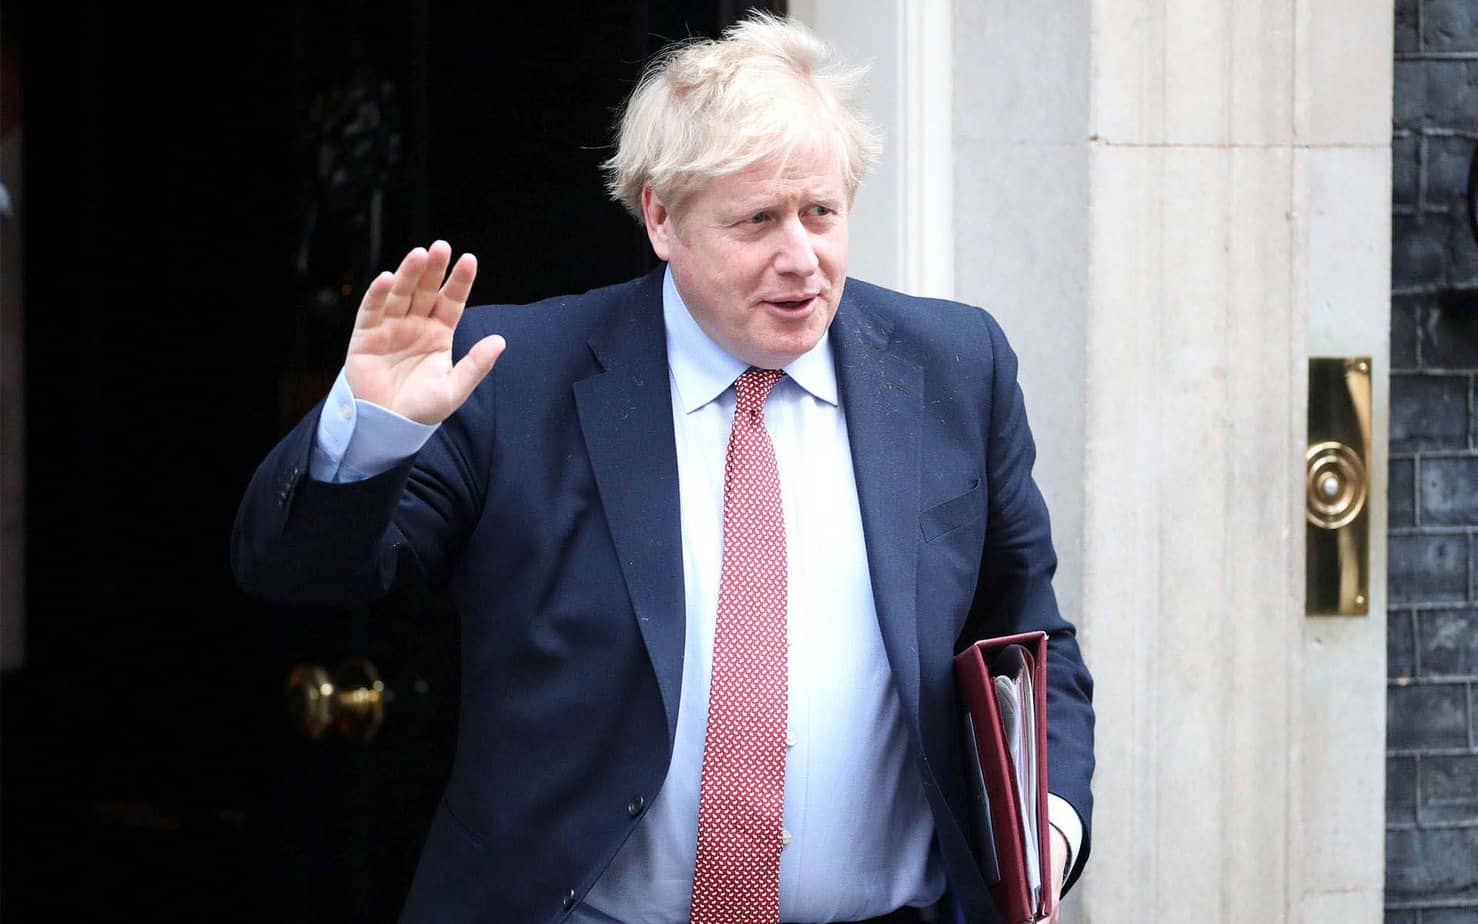 BORIS JOHNSON MOVED TO ICU - UK Prime Minister's symptoms worsen